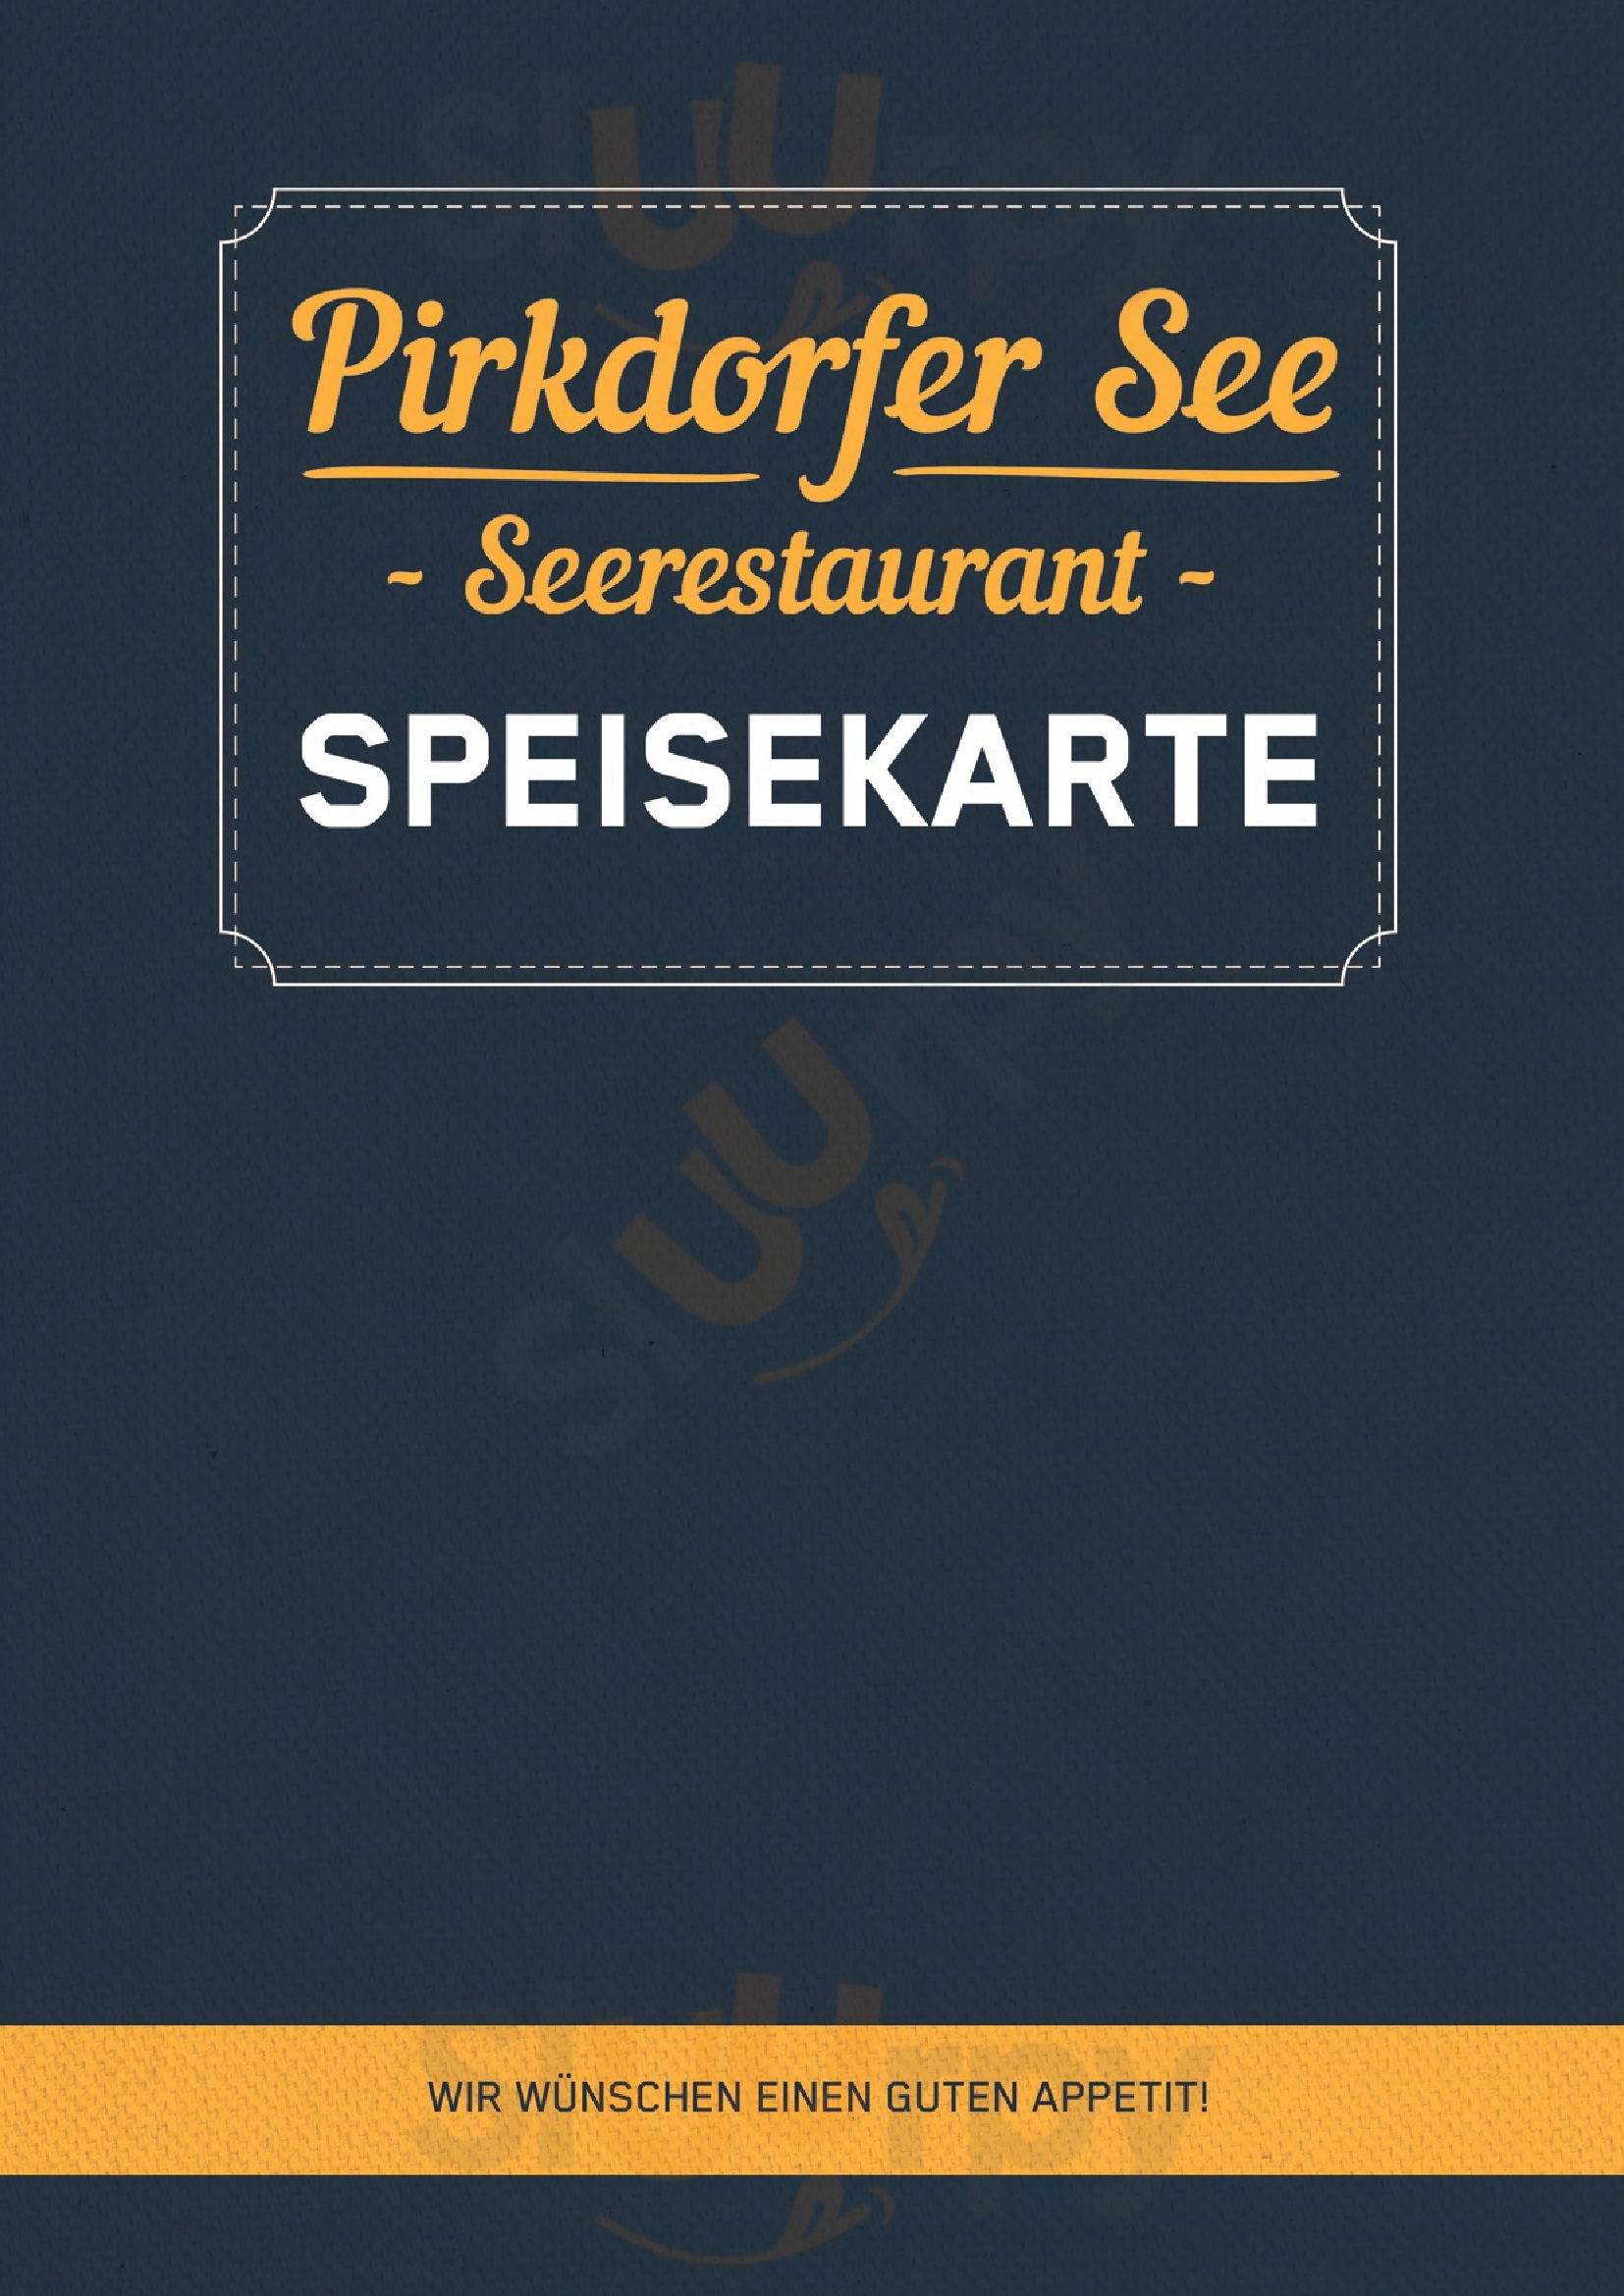 Seerestaurant Pirkdorfer See Feistritz ob Bleiburg Menu - 1